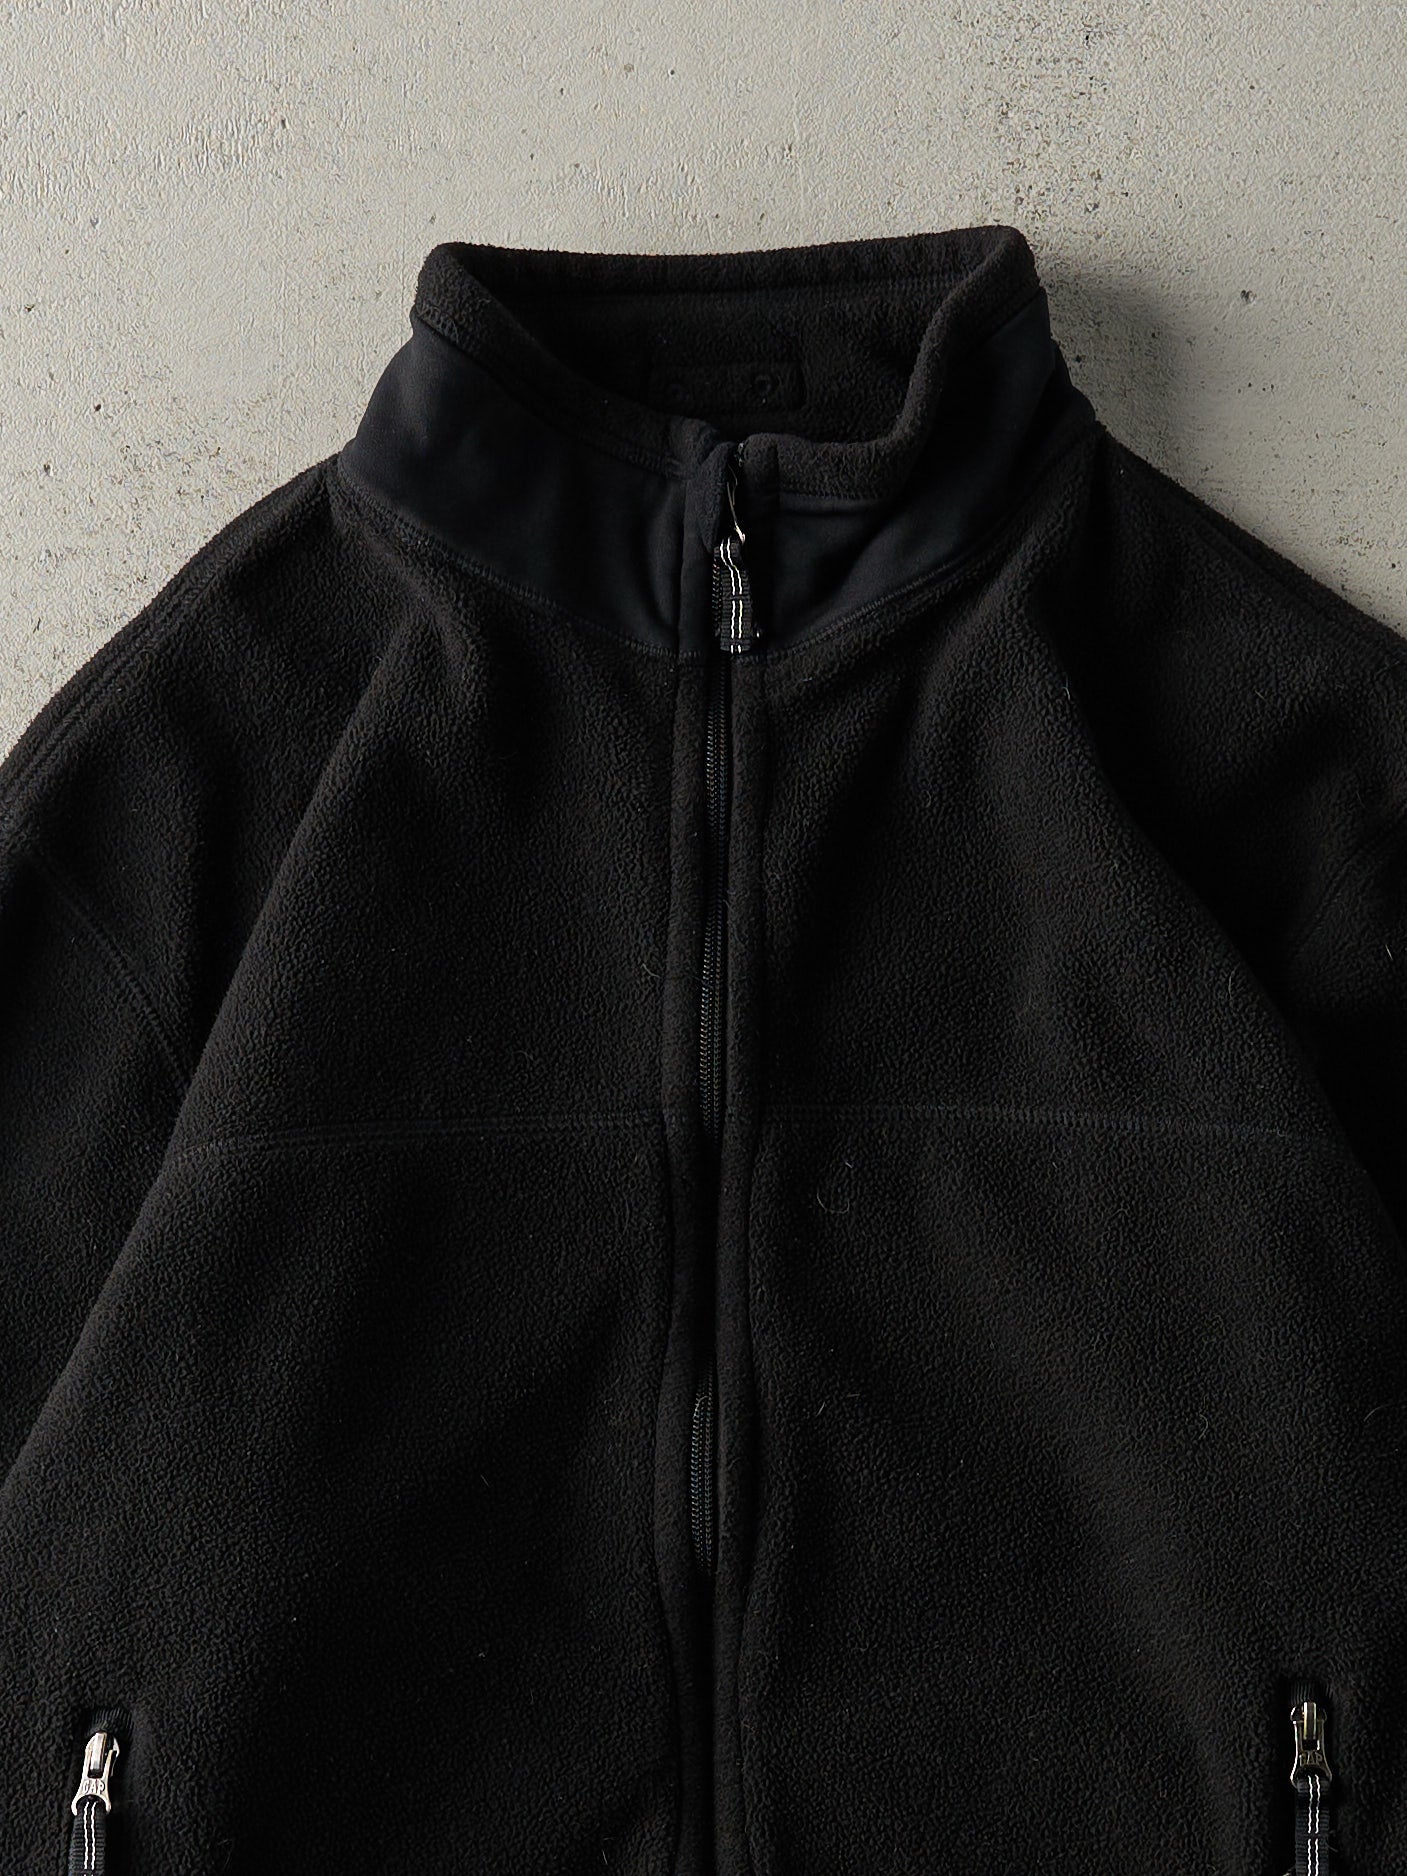 Vintage Y2K Black Gap Fleece Zip Up Sweatshirt (L/XL)